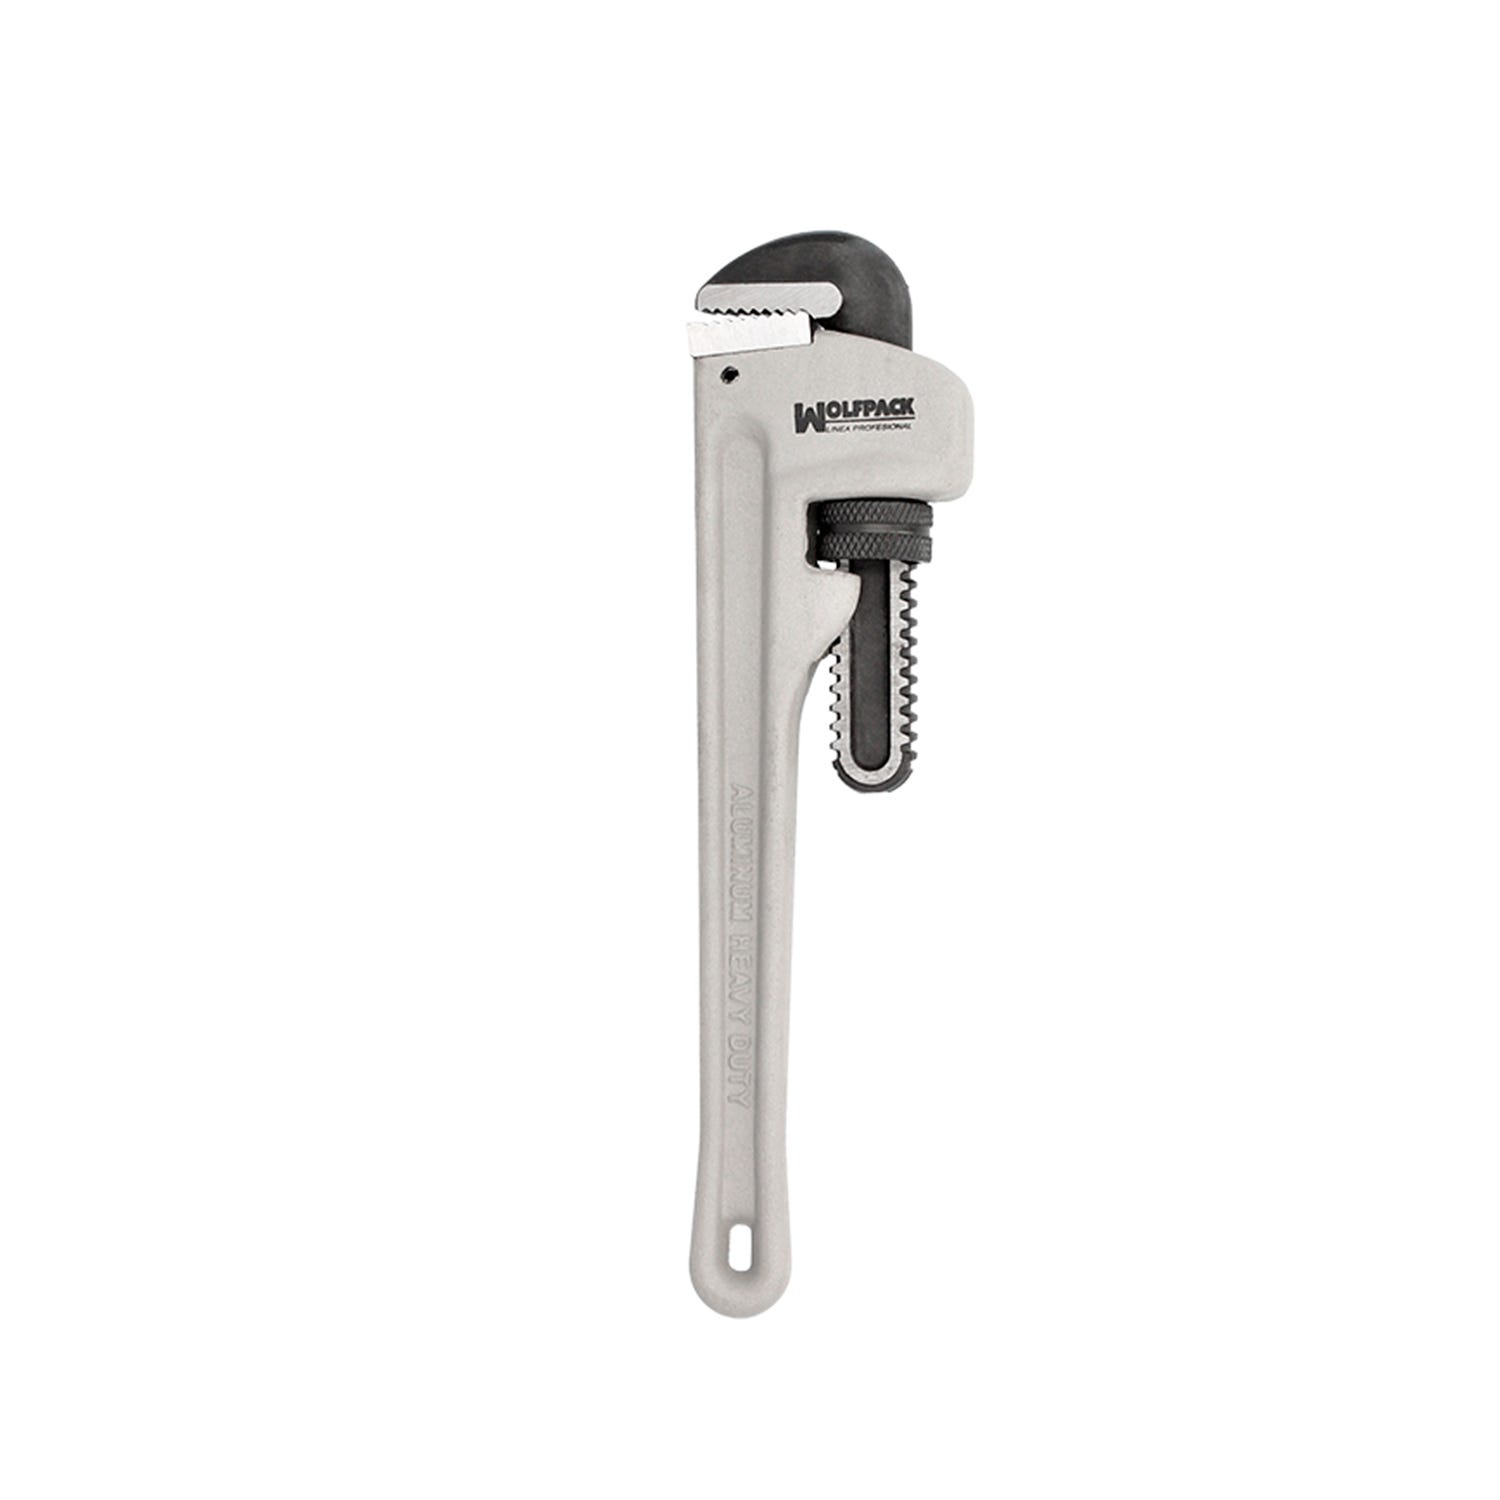 Llave stillson heavy duty aluminio 10 llave para tubos, llave plomeria,  llave para tuberias, llave grifa.